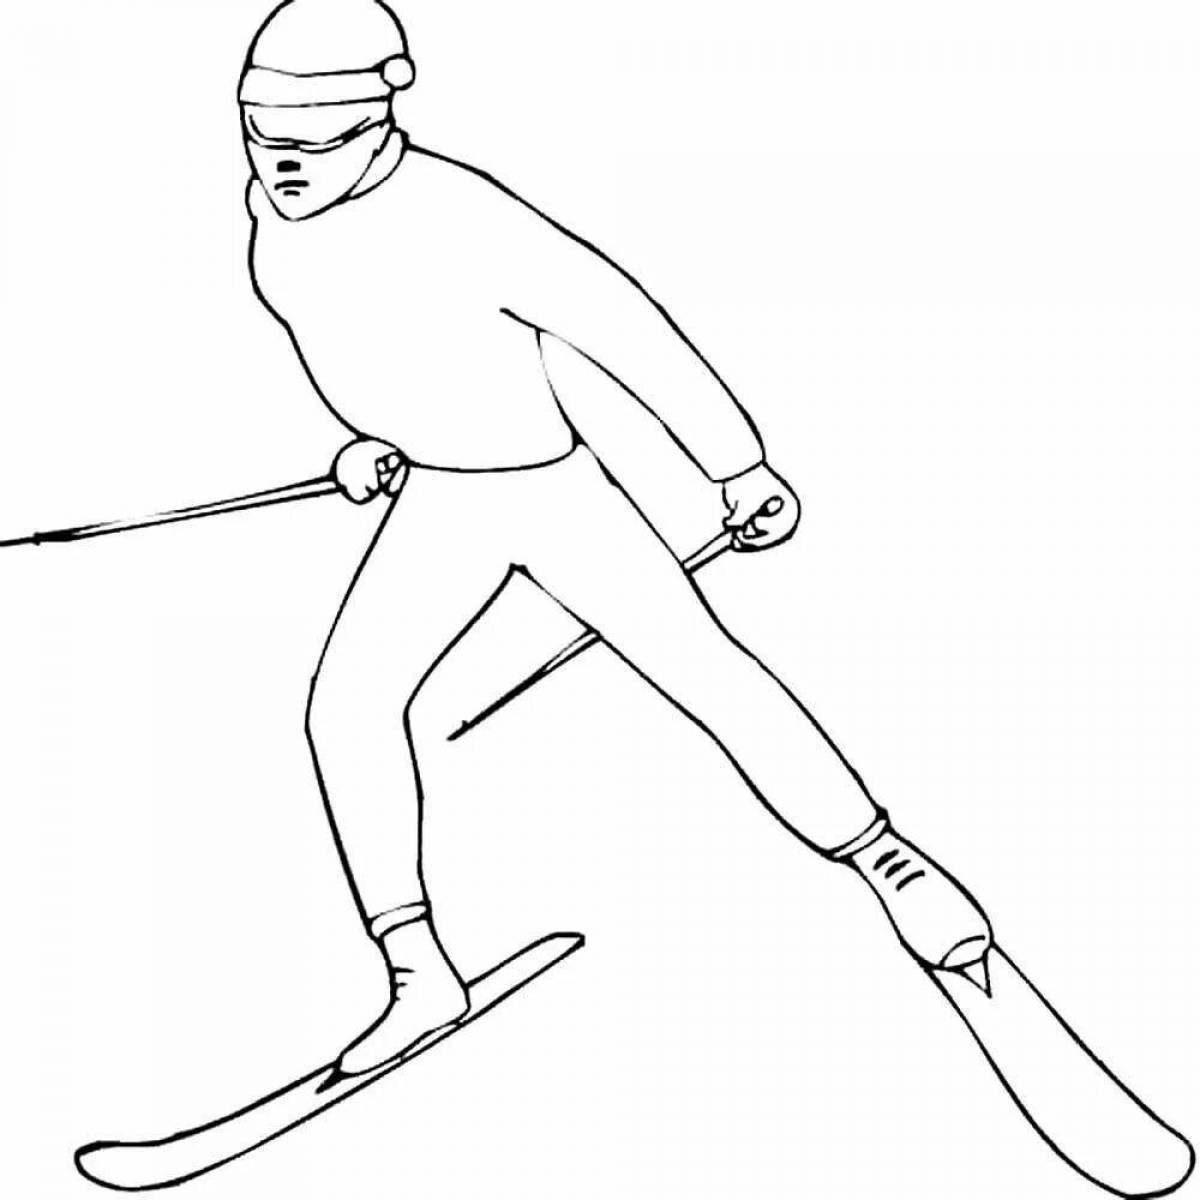 Cross-country skiing #5